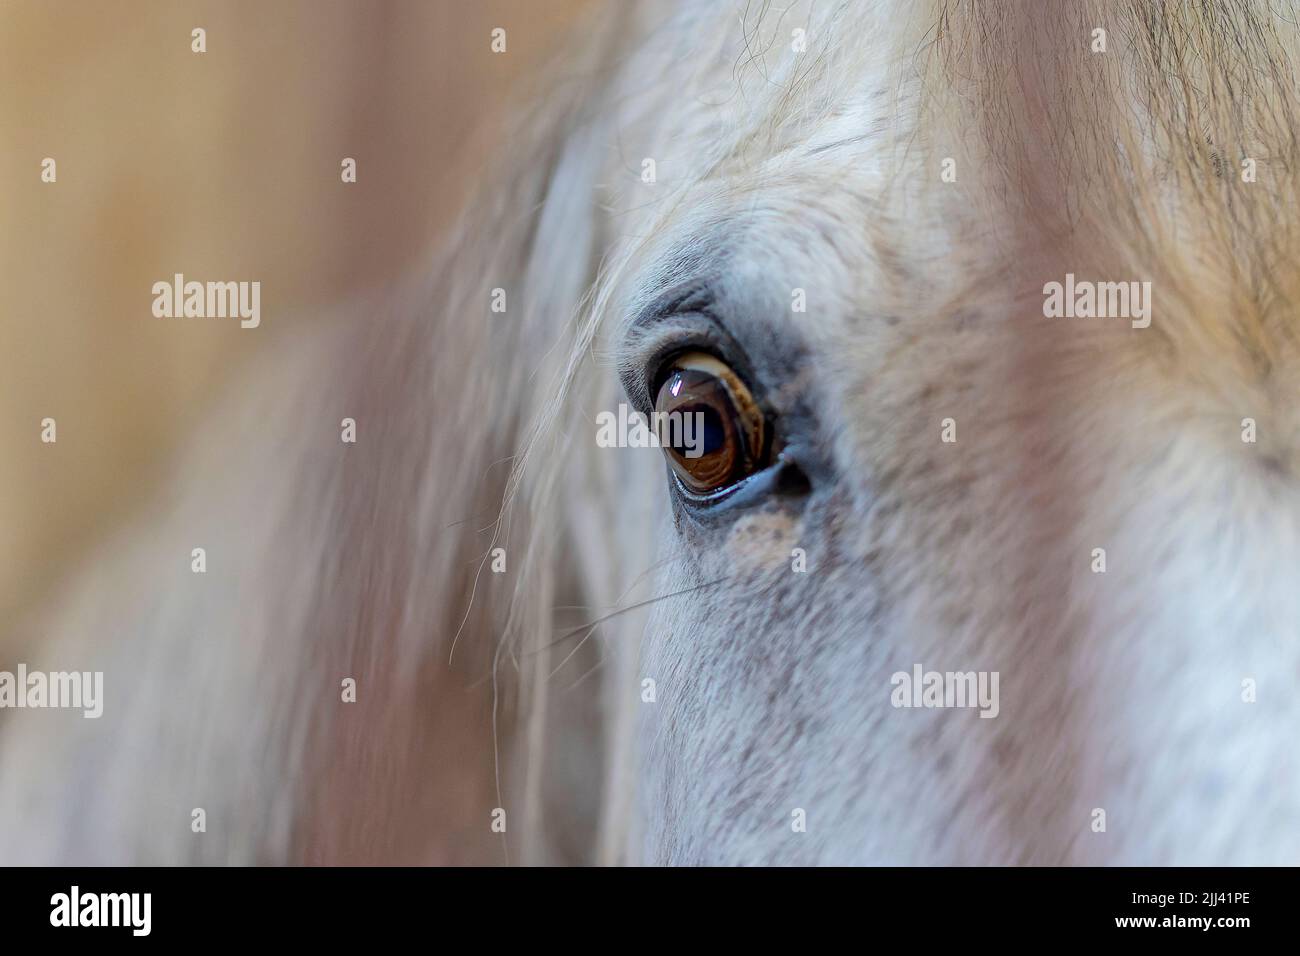 Horse's head, close up of eye Stock Photo